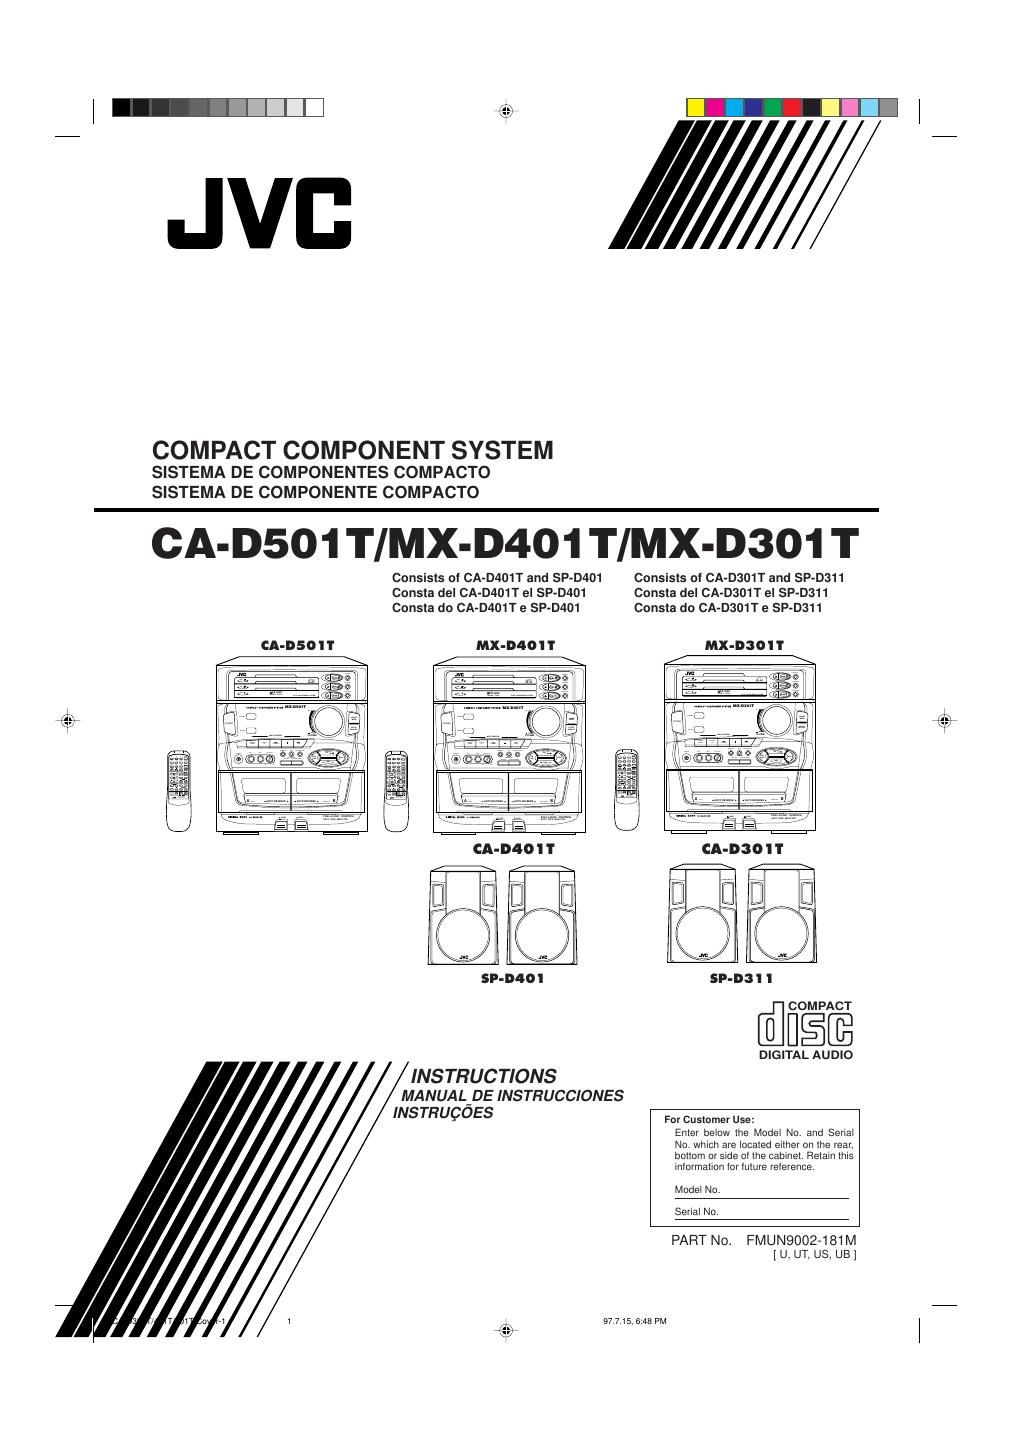 Jvc MXD 301 T Owners Manual